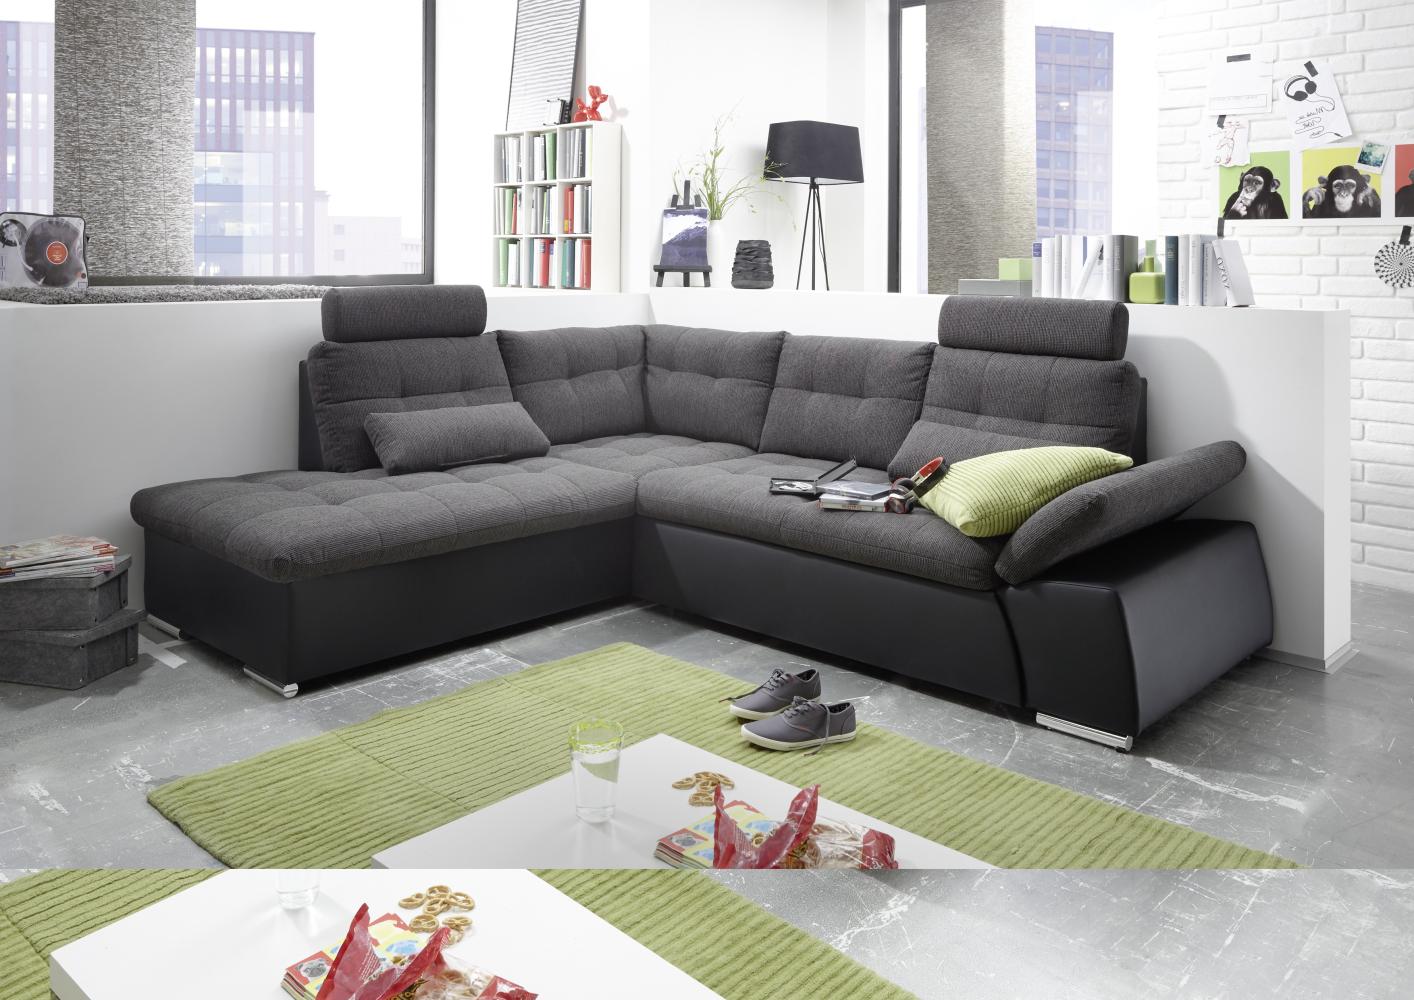 Ecksofa JAK Couch Schlafcouch Sofa Lederlook schwarz grau Ottomane links L-Form Bild 1